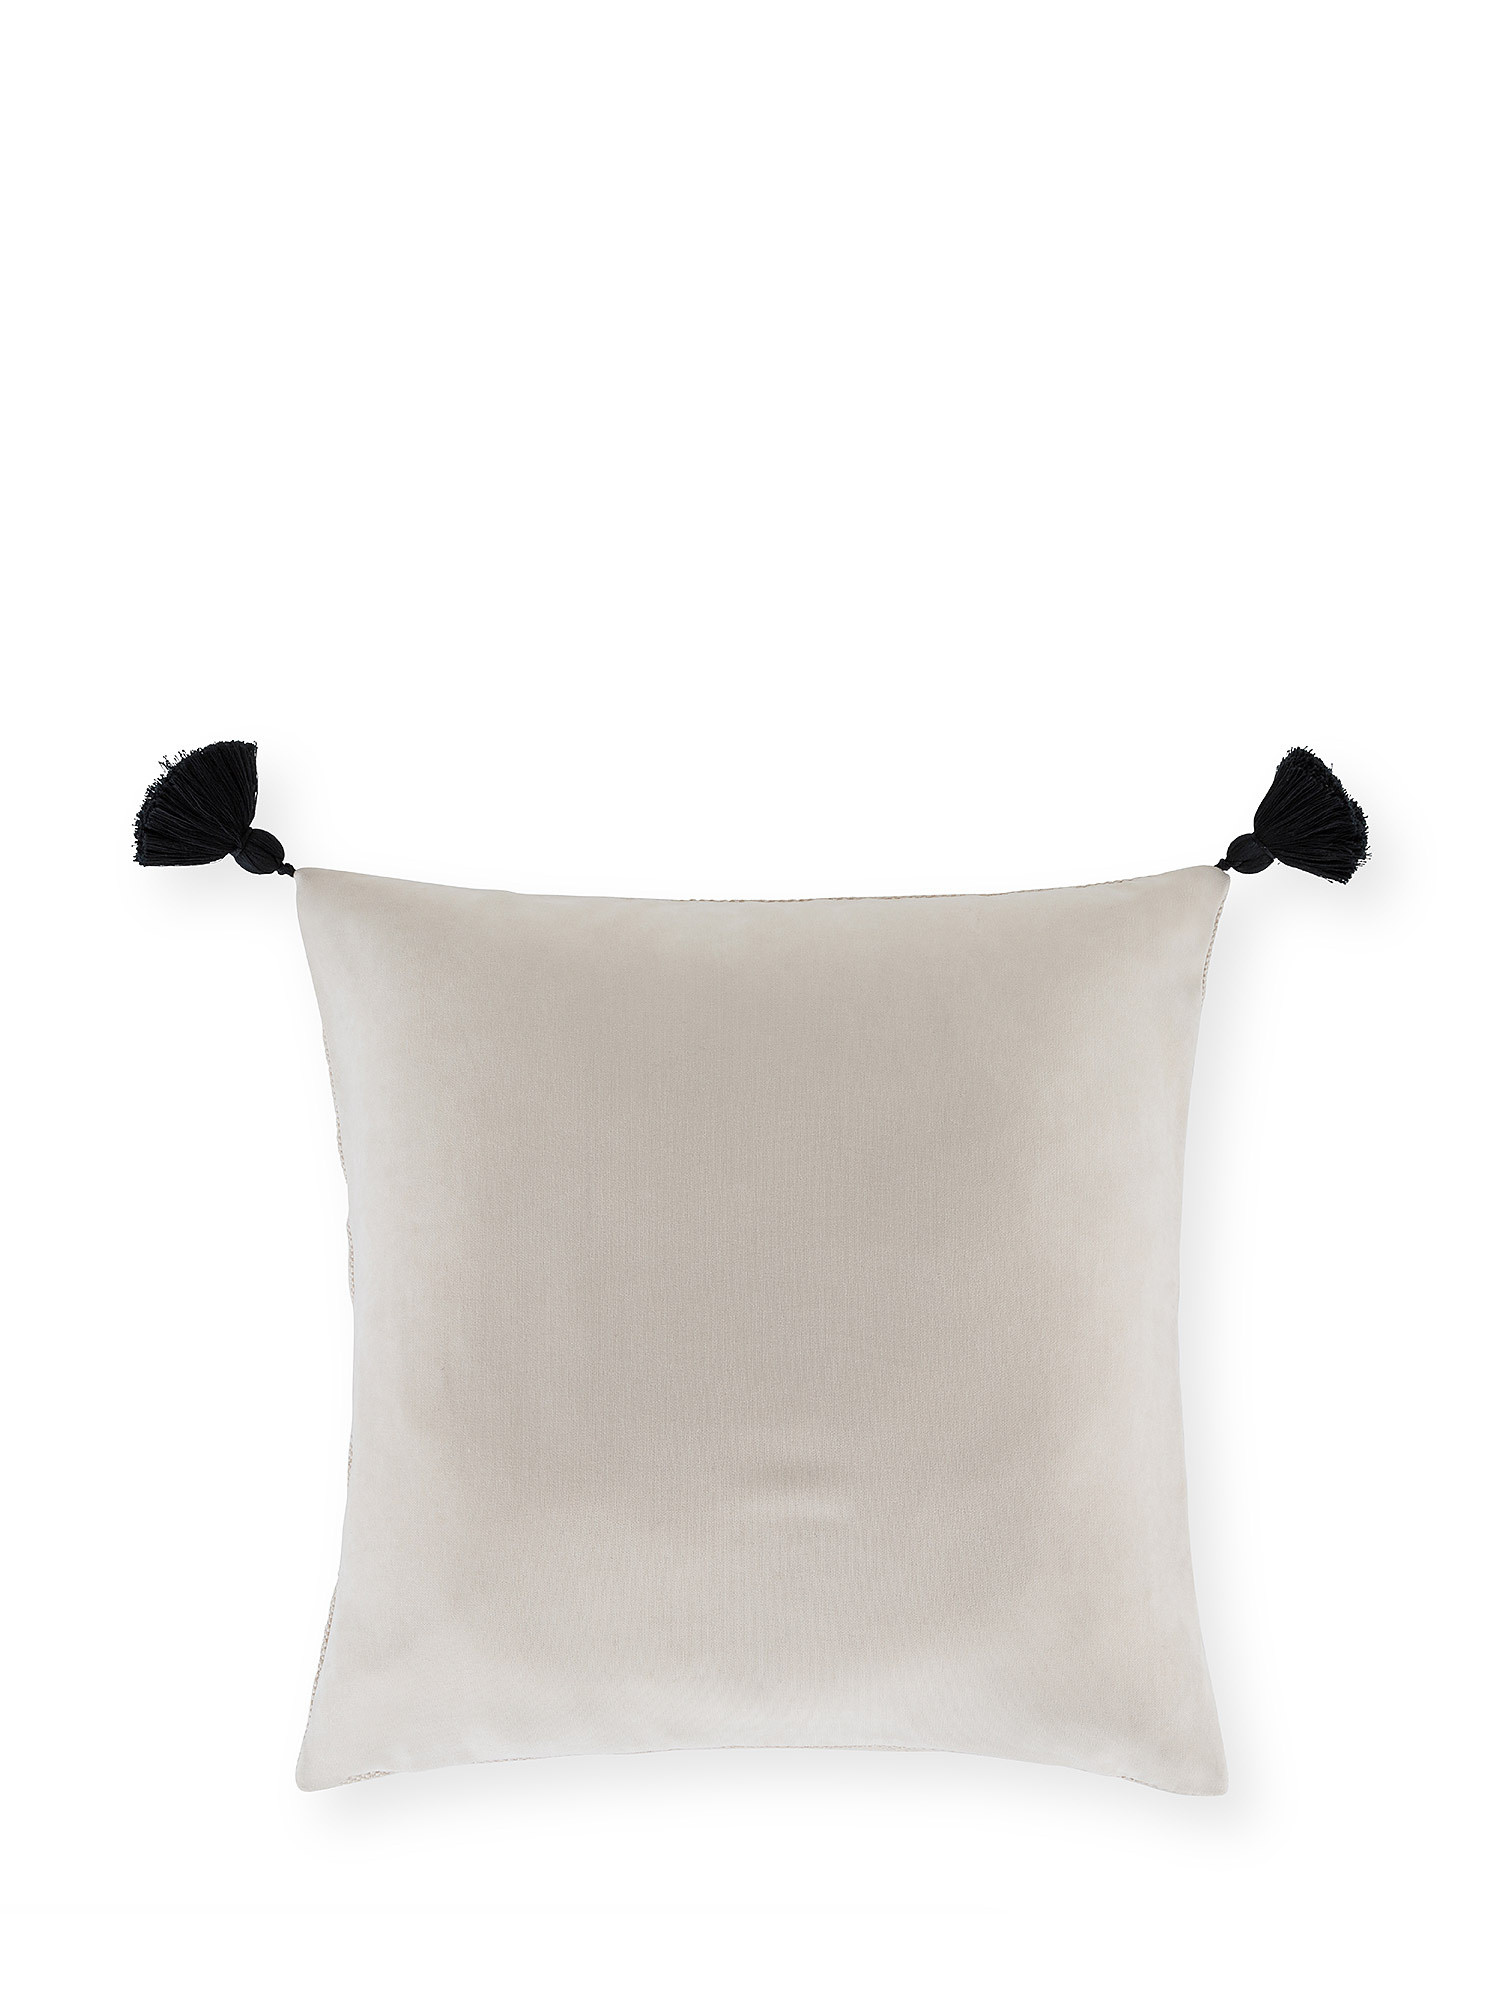 Jacquard cushion with tassel 50x50cm, Beige, large image number 1